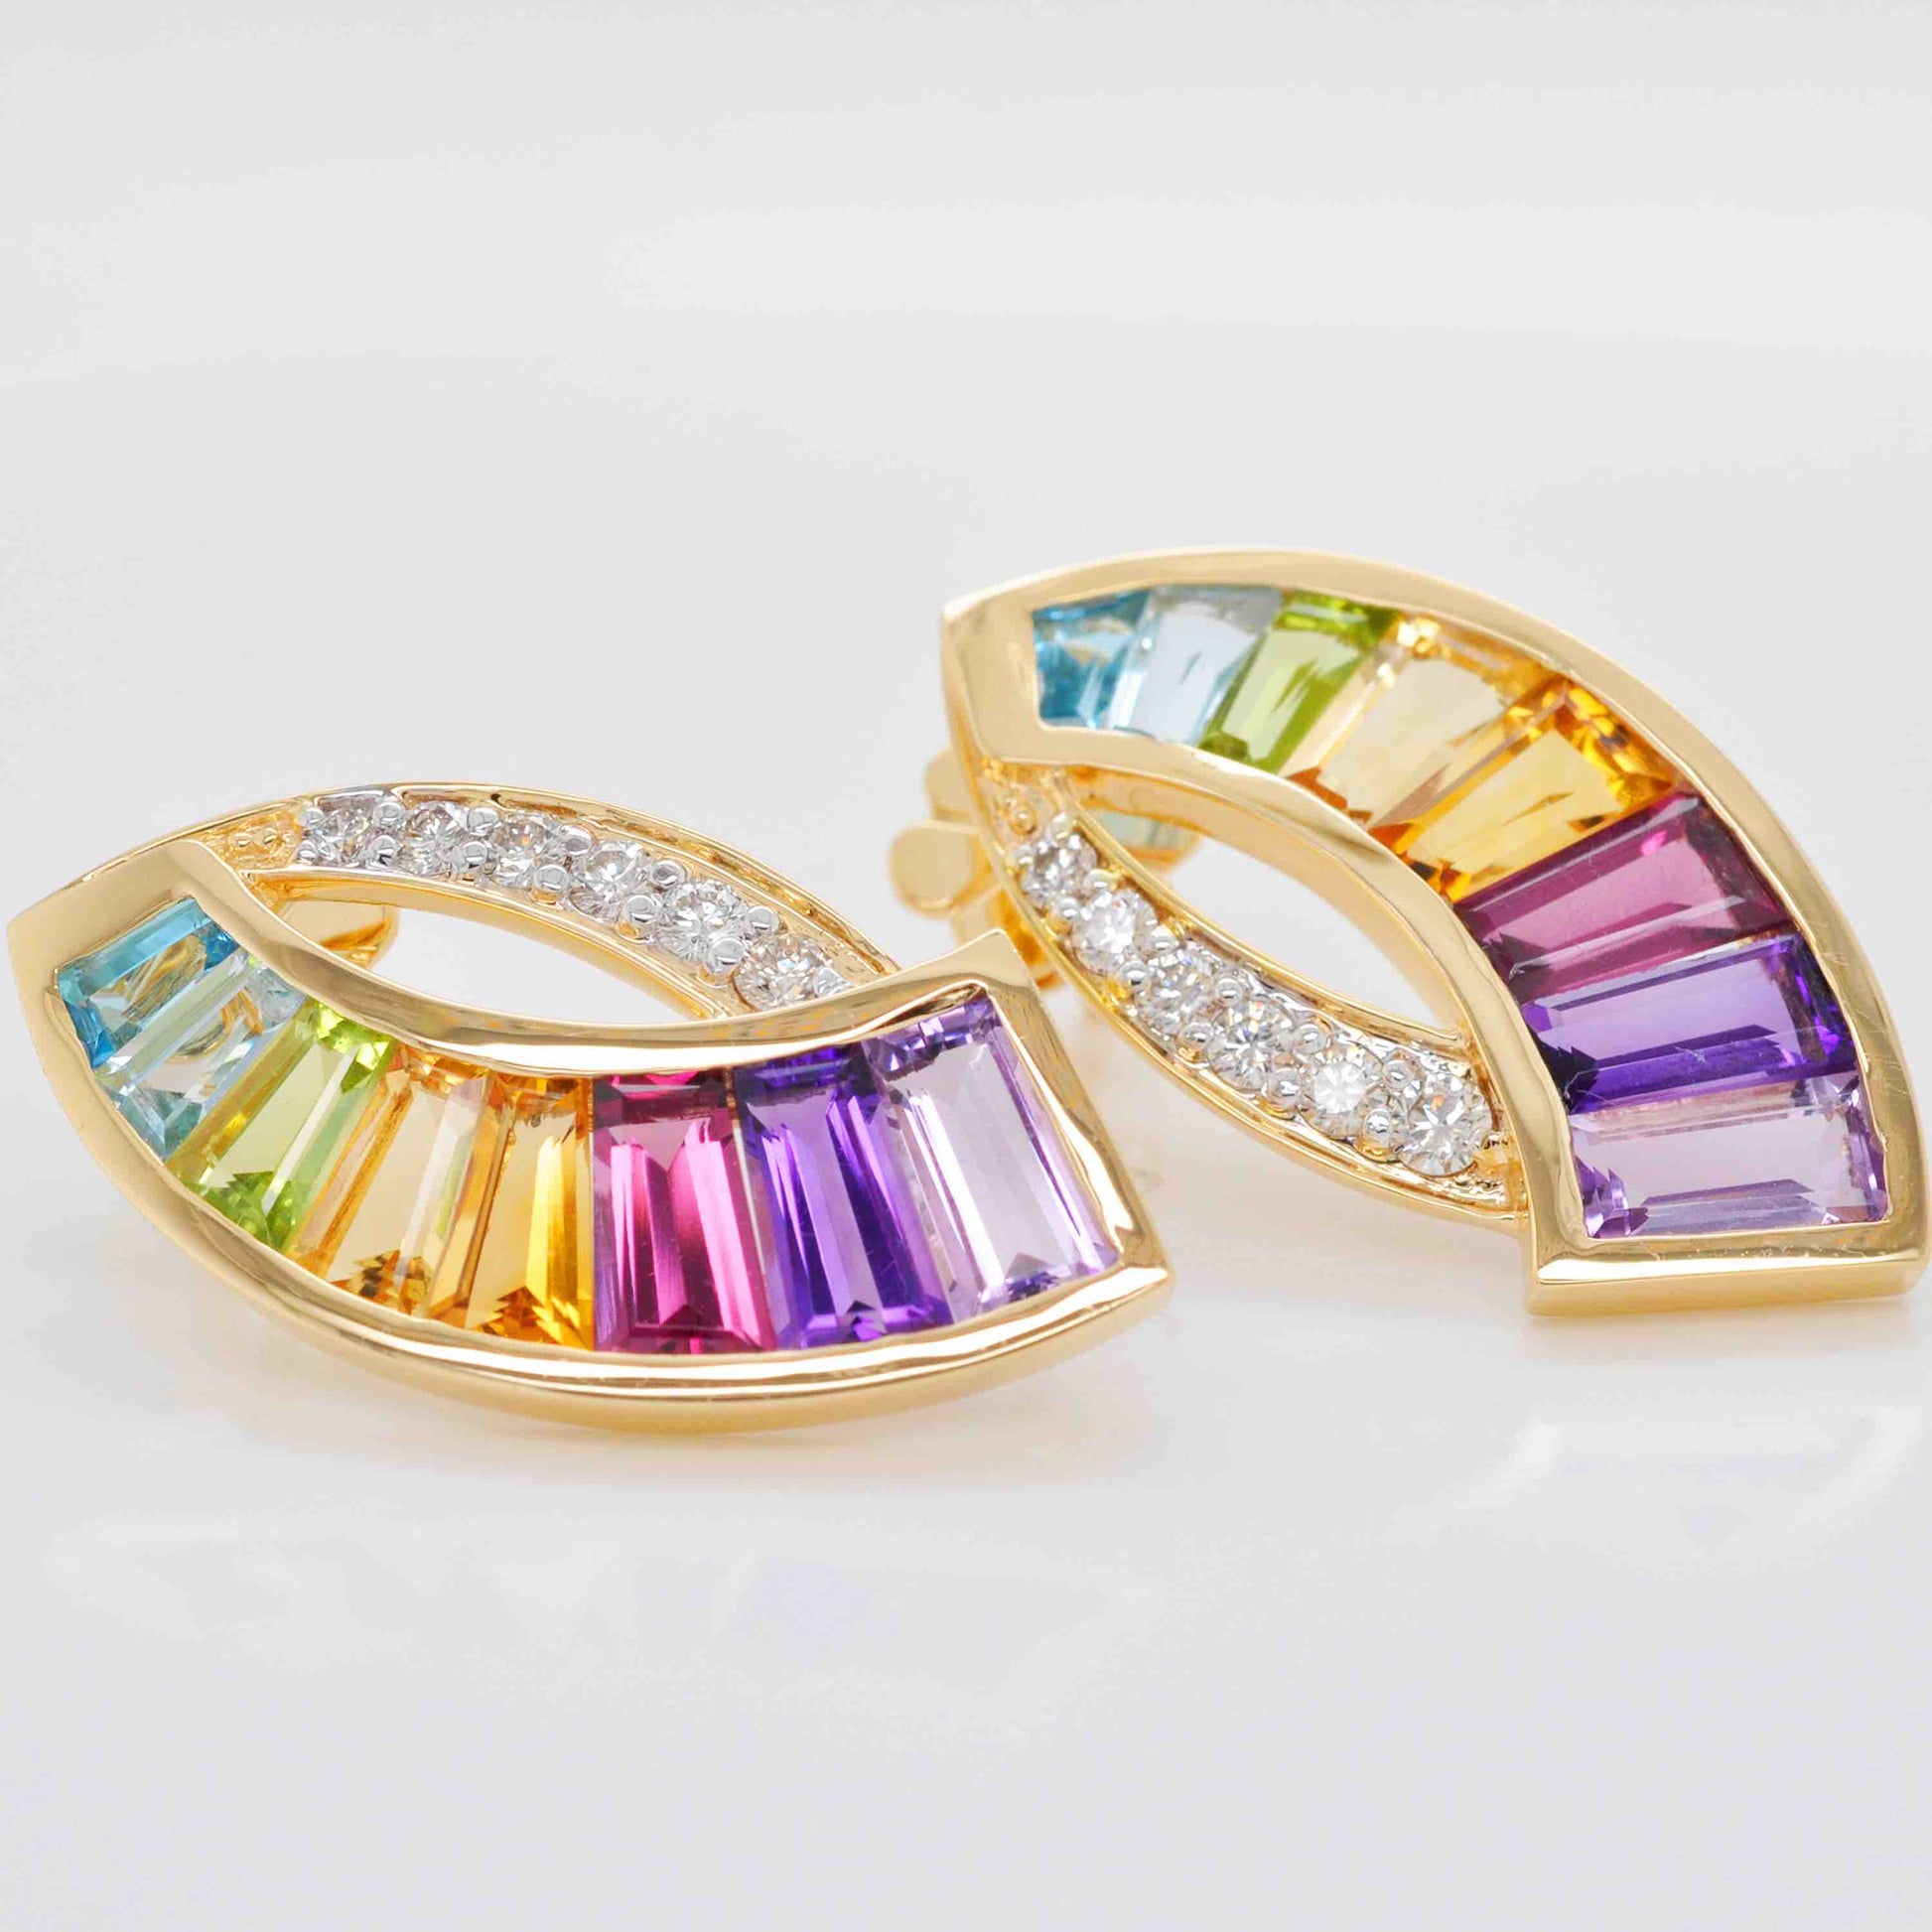 Best gemstone jewelry online